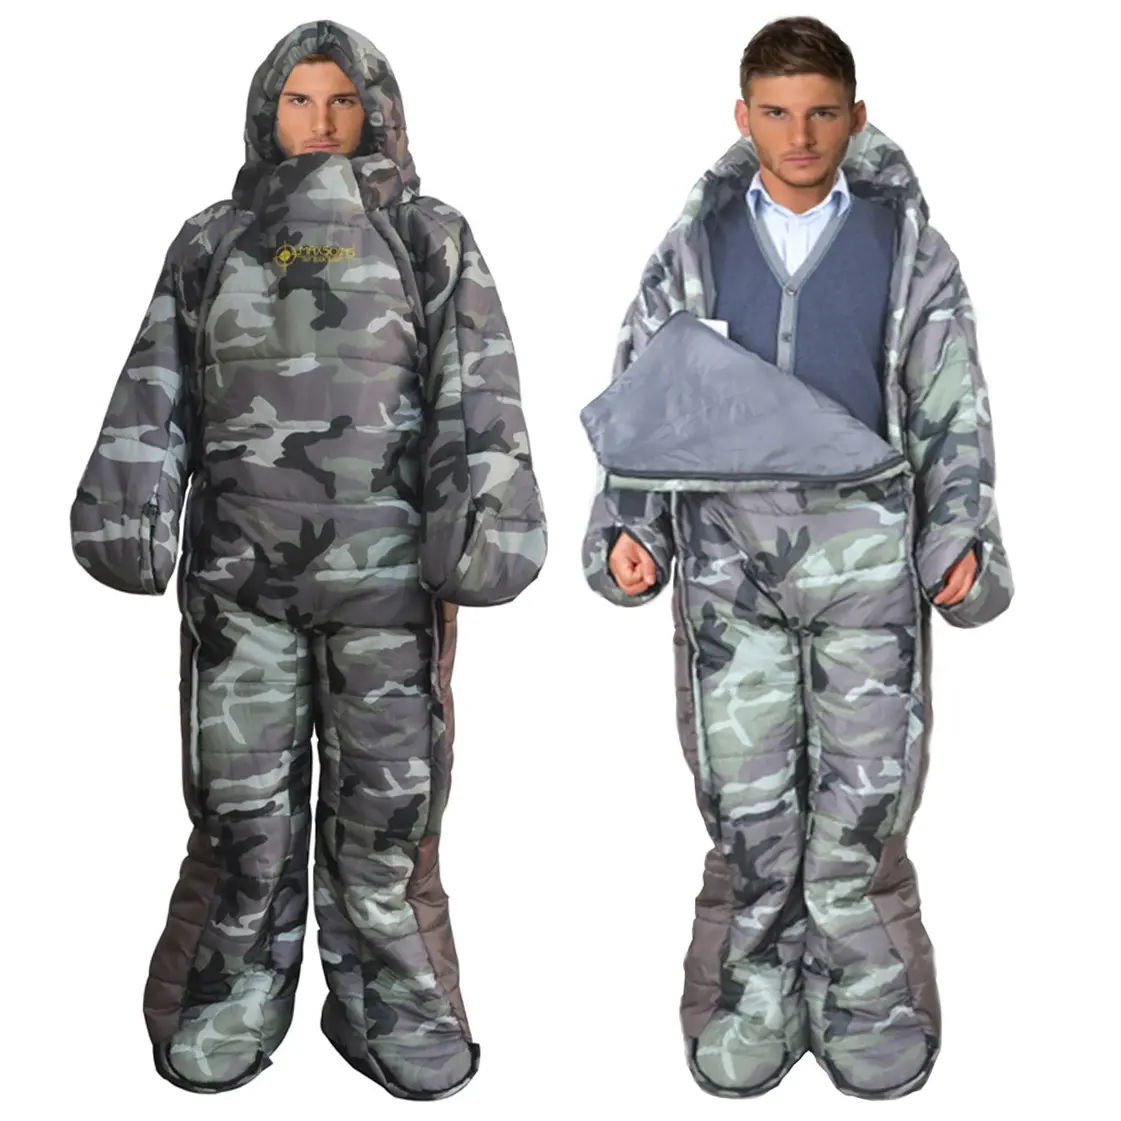 Survival Winter Camping Waterproof Lightweight Backpacking Winter Human Shape Sleeping Bag For Camping